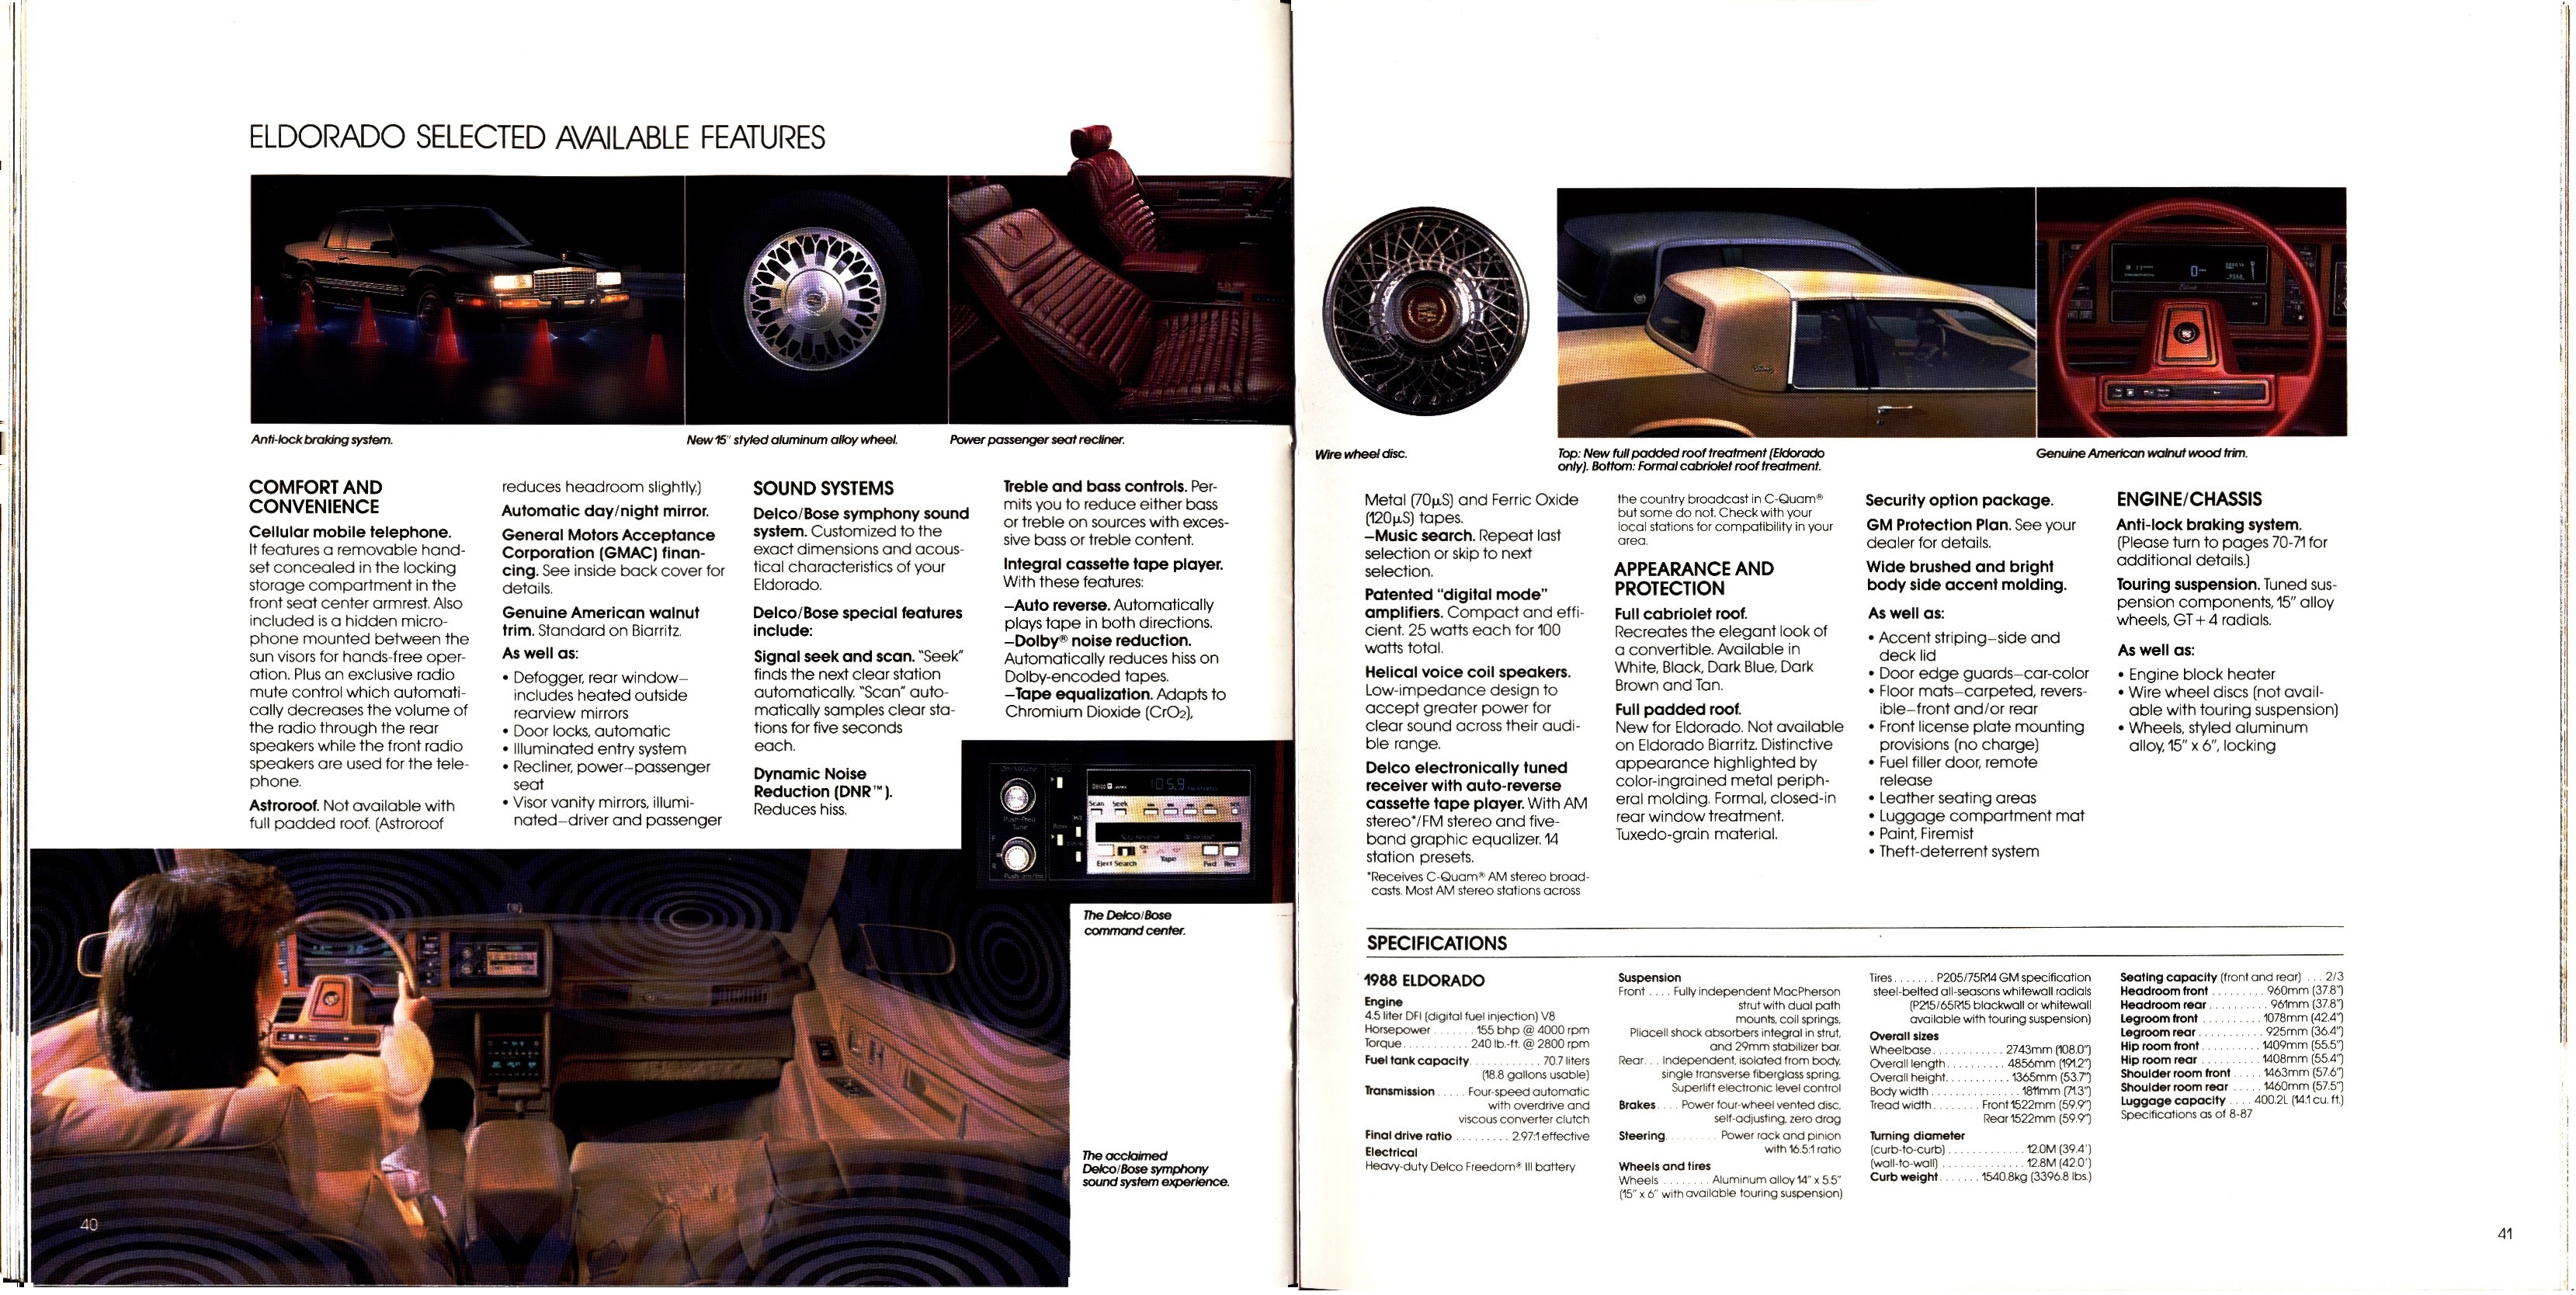 1988 Cadillac Full Line Prestige Brochure 40-41